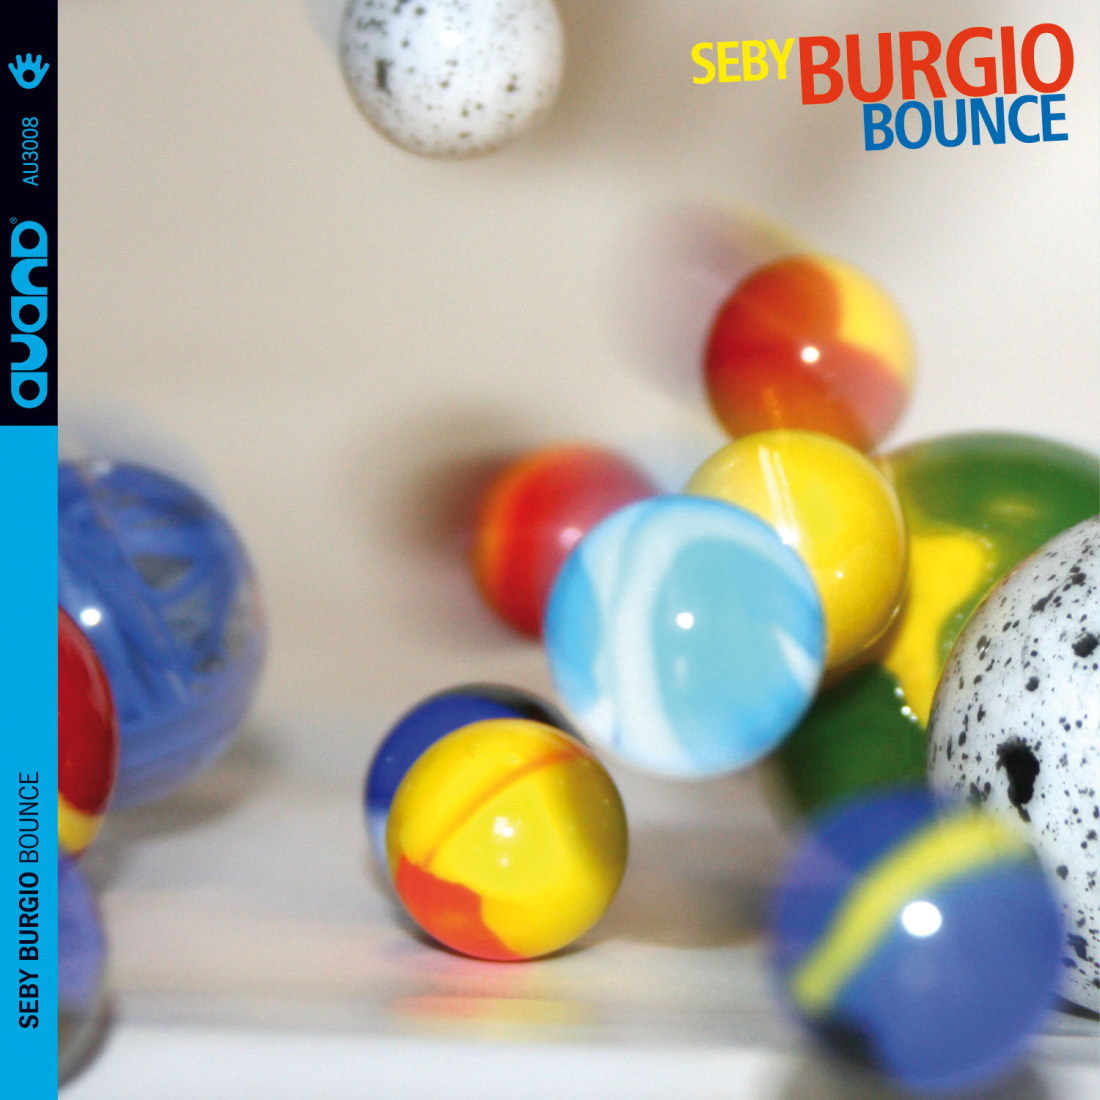 Seby Burgio / Bounce